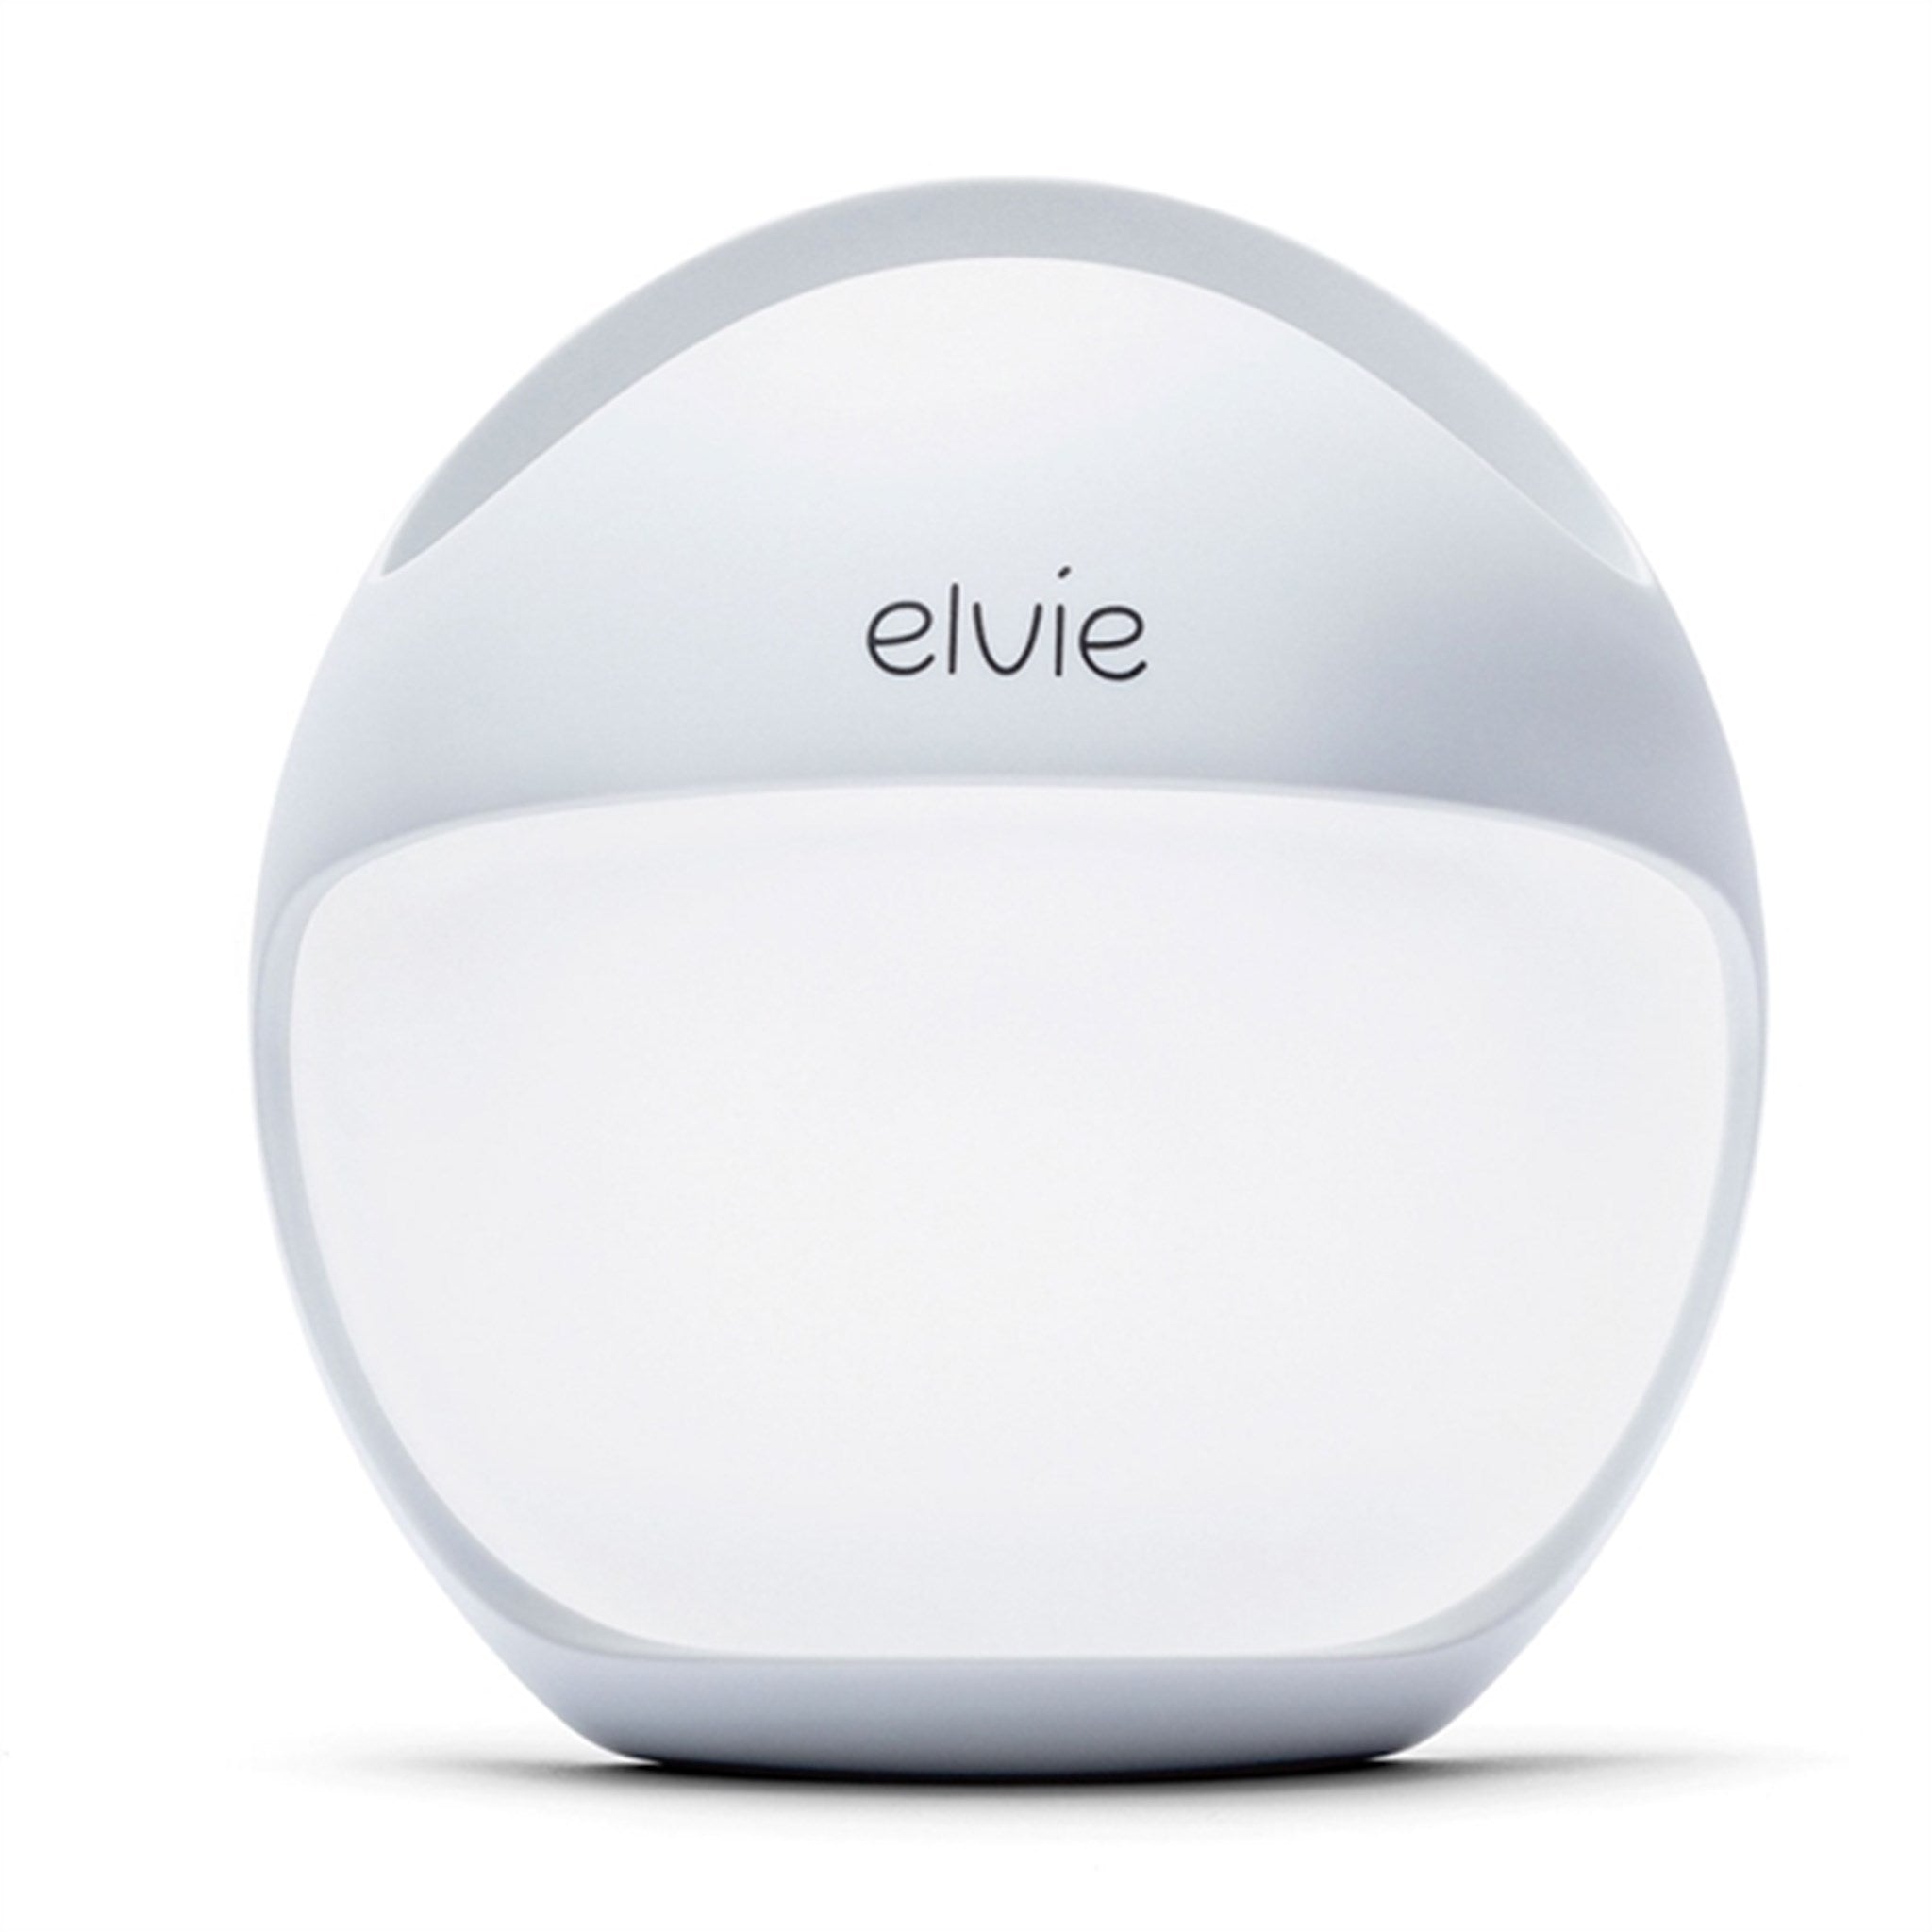 Elvie Breast Pump Curve White/Clear